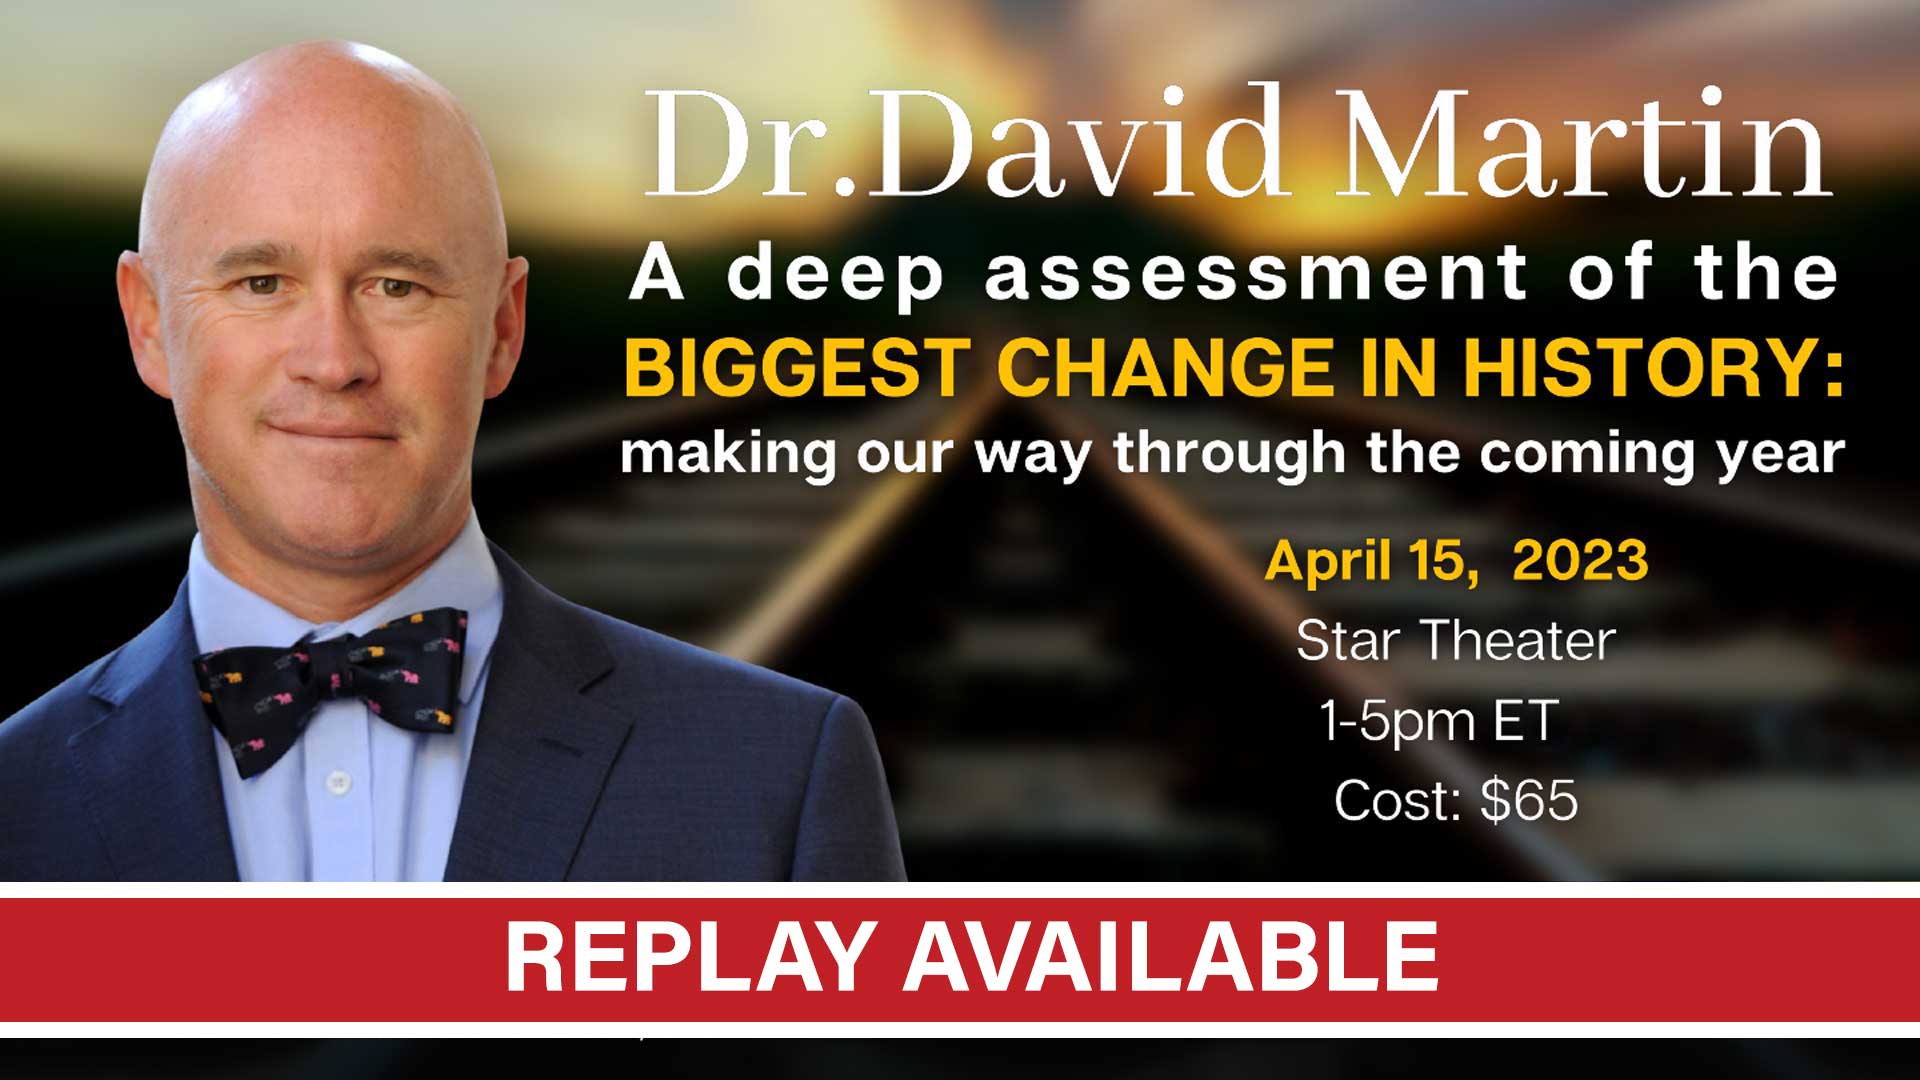 Dr. David Martin 2023 replay available